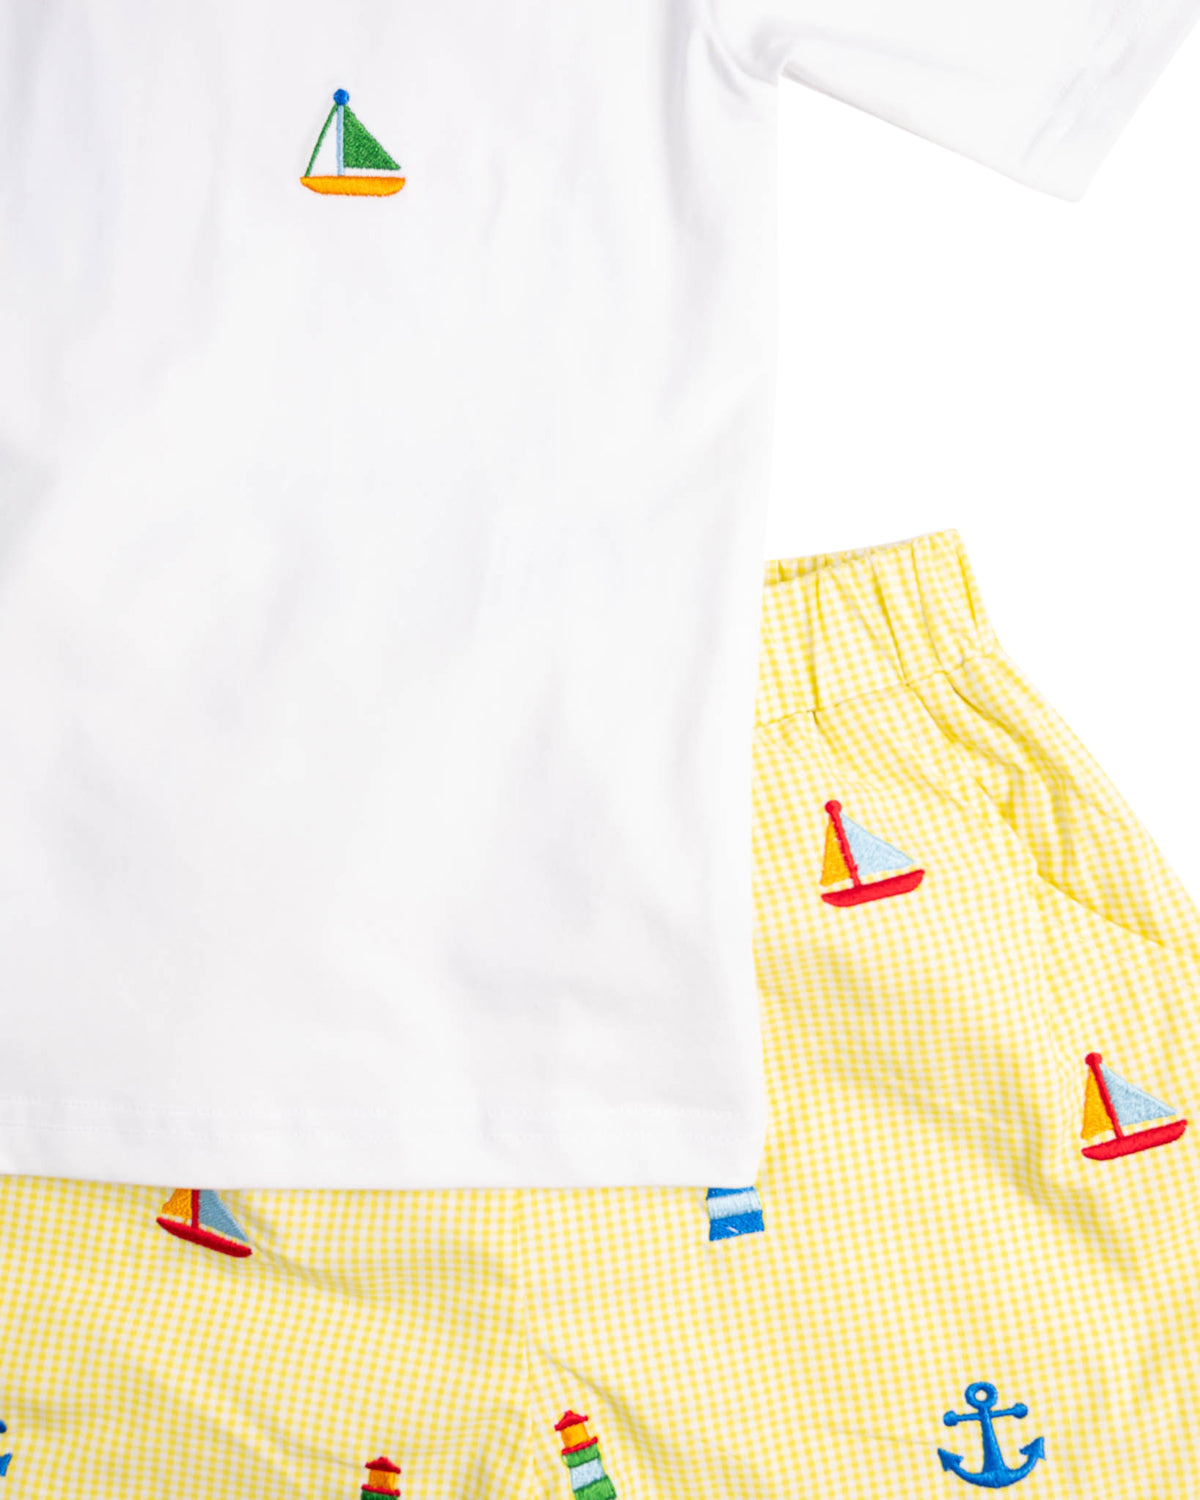 Nautical Embroidery Shorts Set